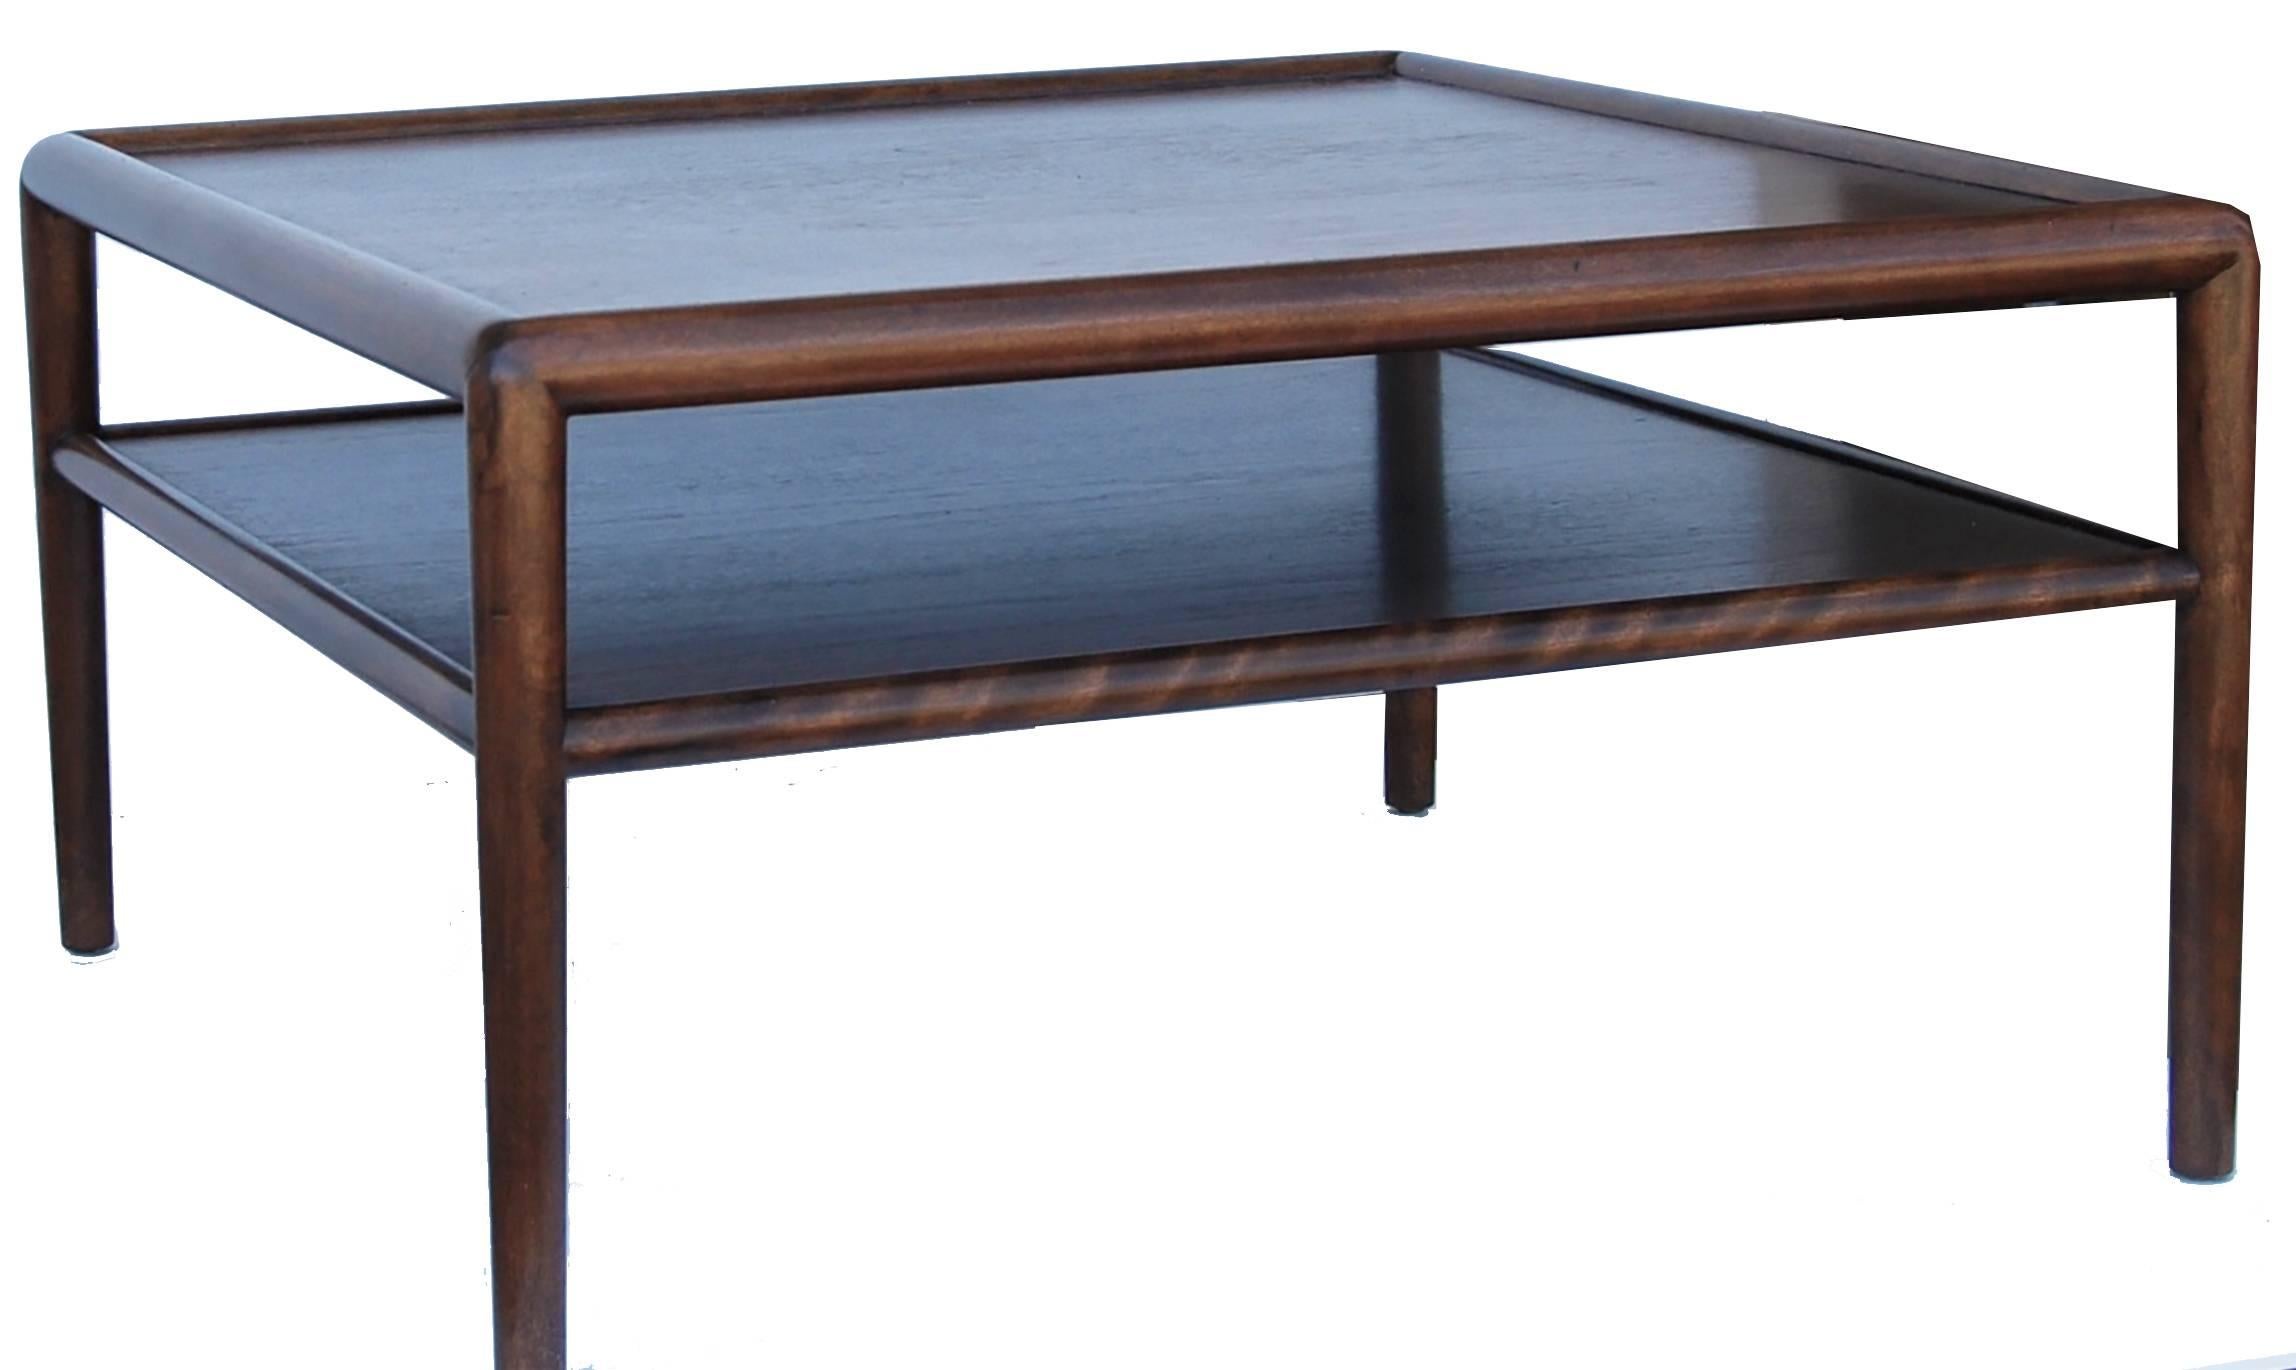 Dark walnut two-tiered coffee or side table marked Widdicomb, designed by 
T. H. Robsjohn-Gibbings.